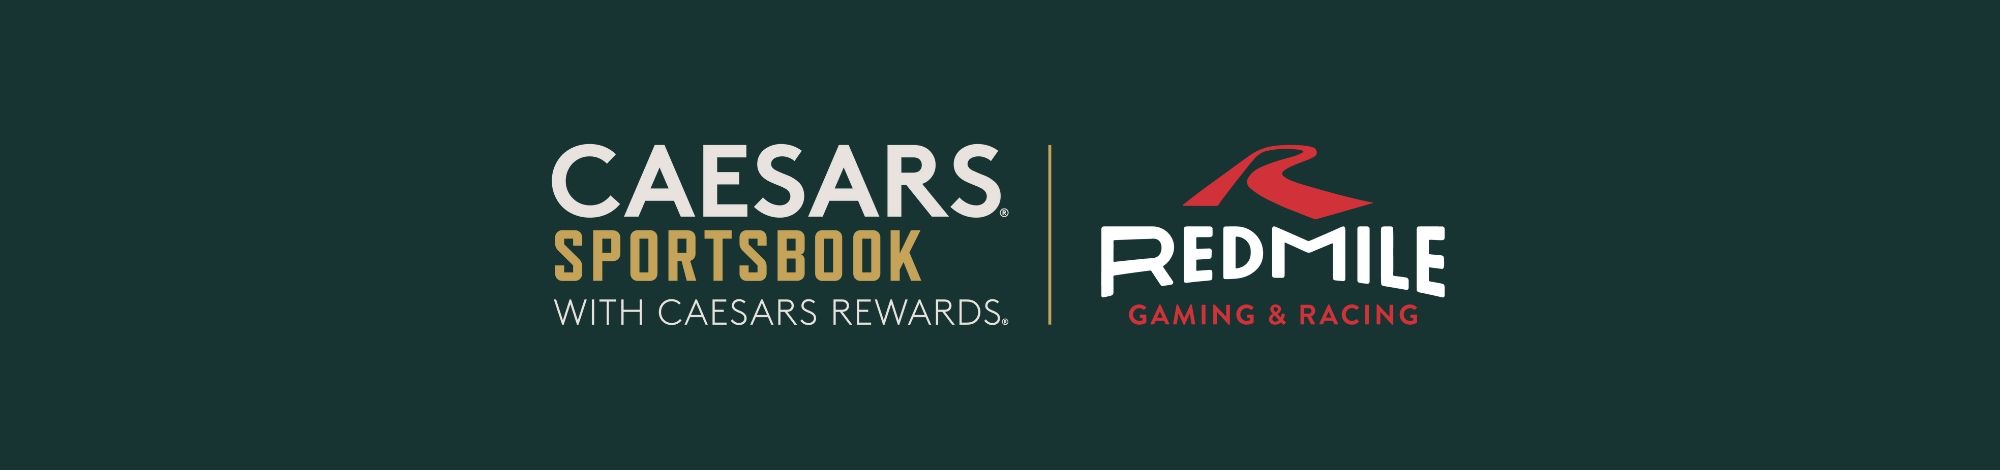 Caesars Sportsbook with Caesars Rewards